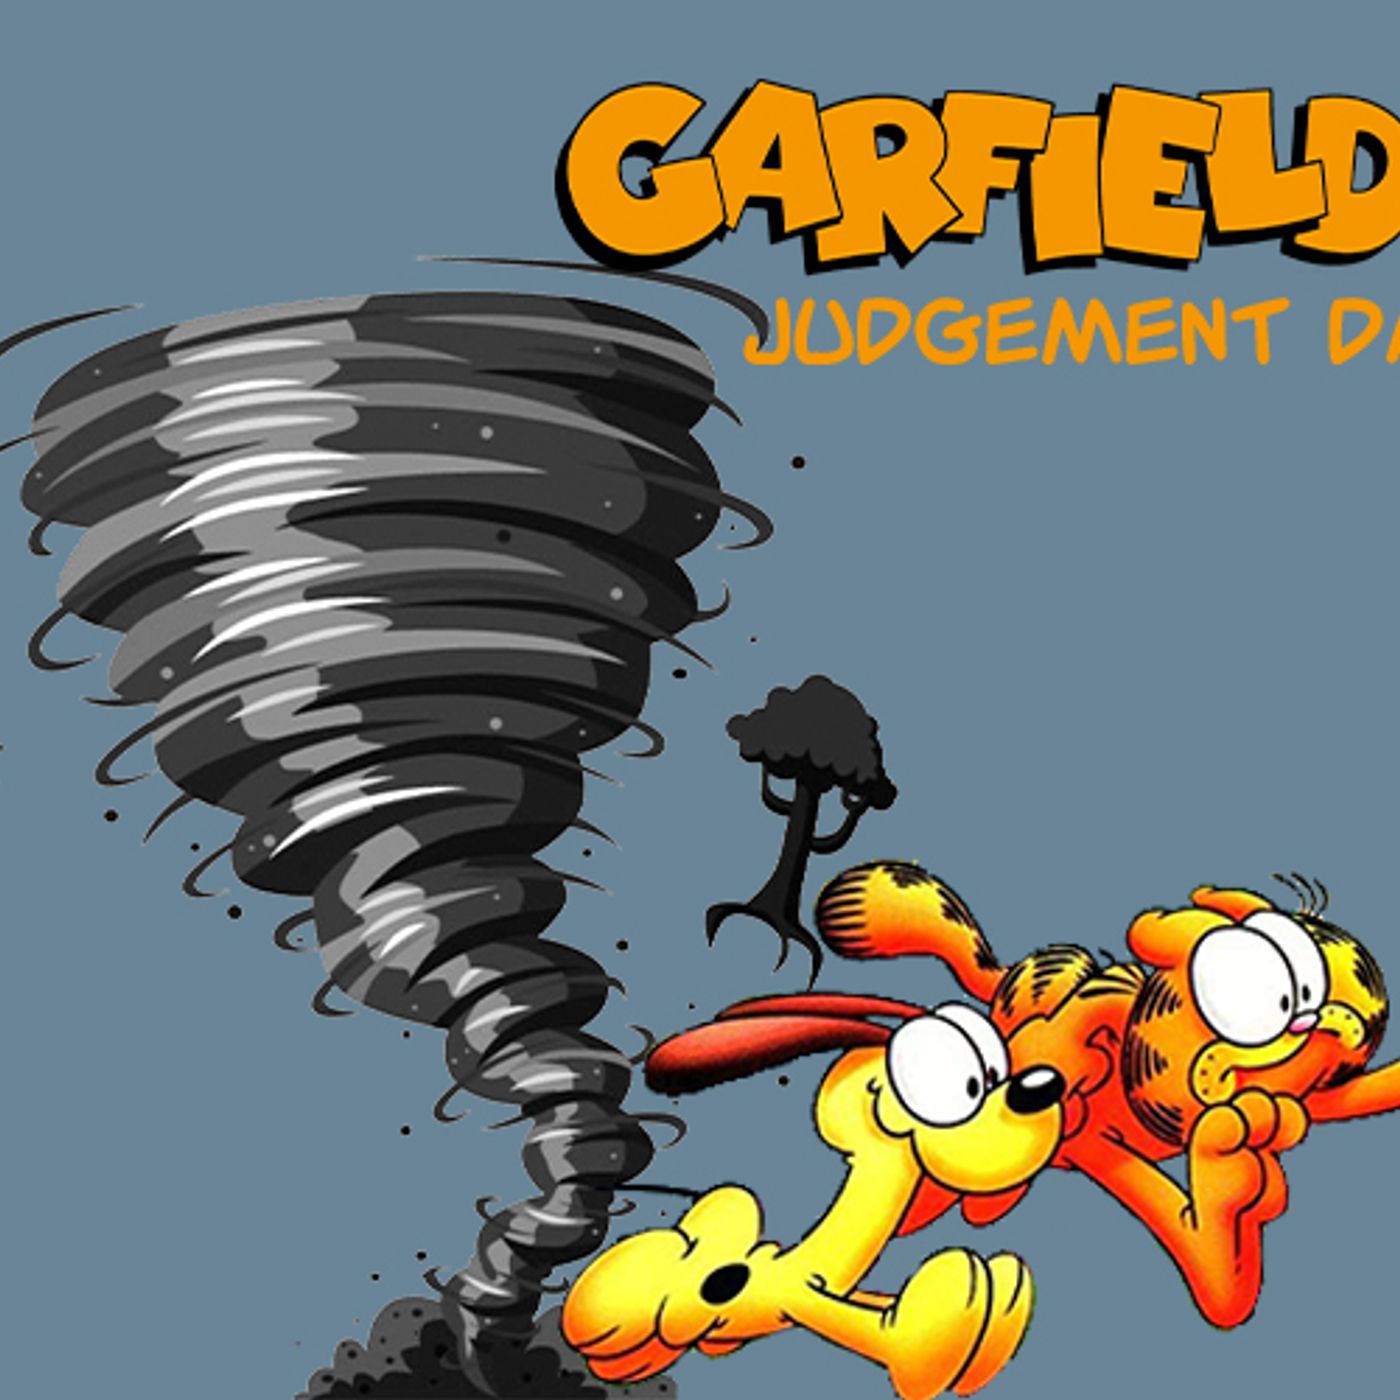 Garfield’s Judgement Day